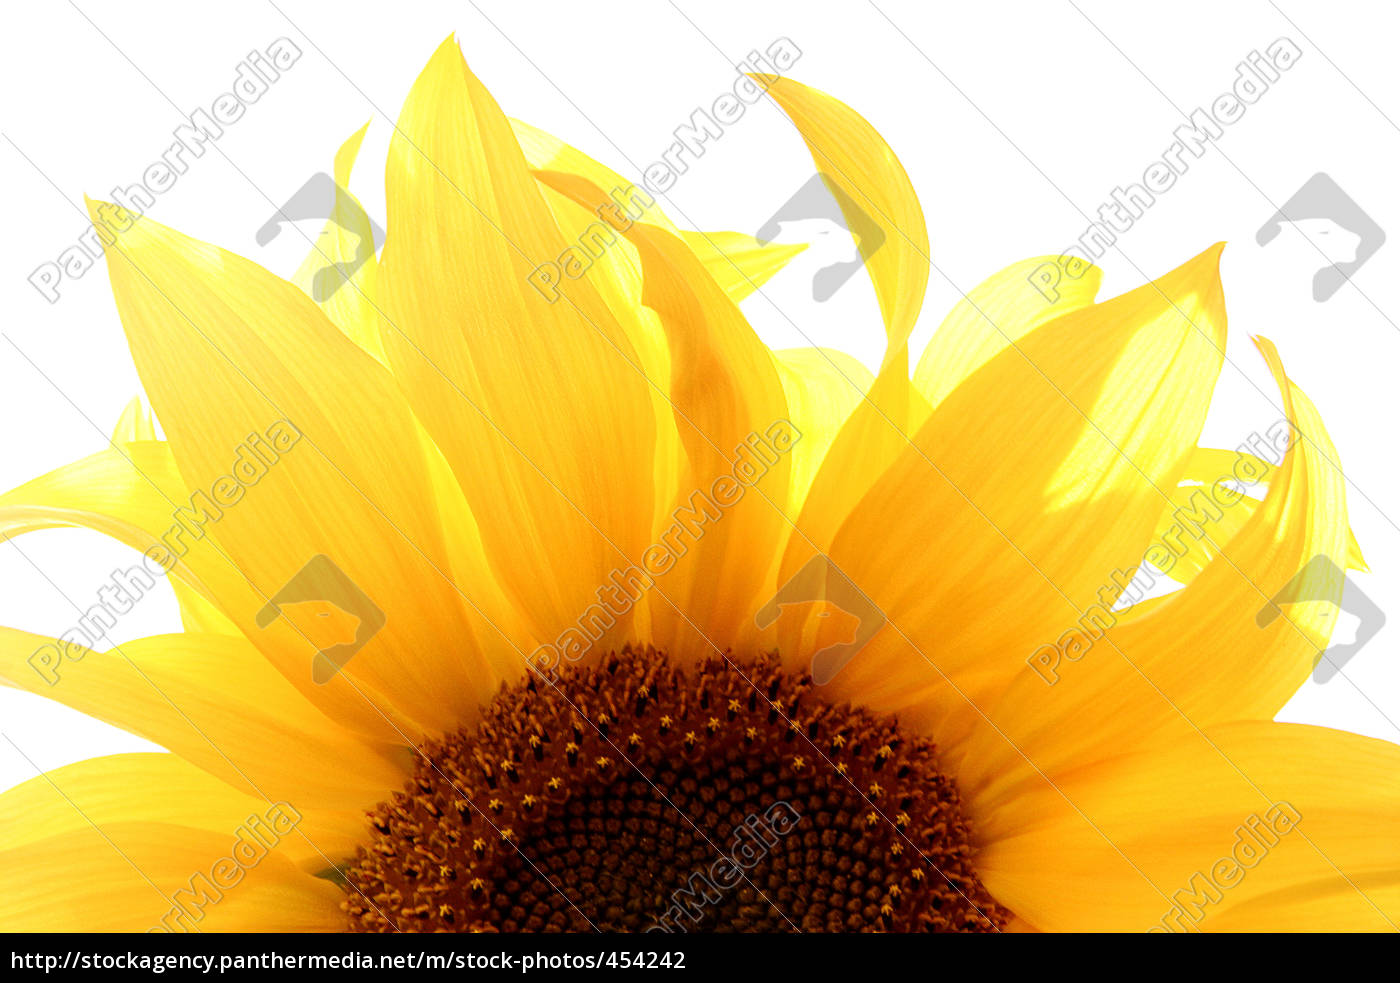 Download half sunflower - Royalty free image - #454242 ...